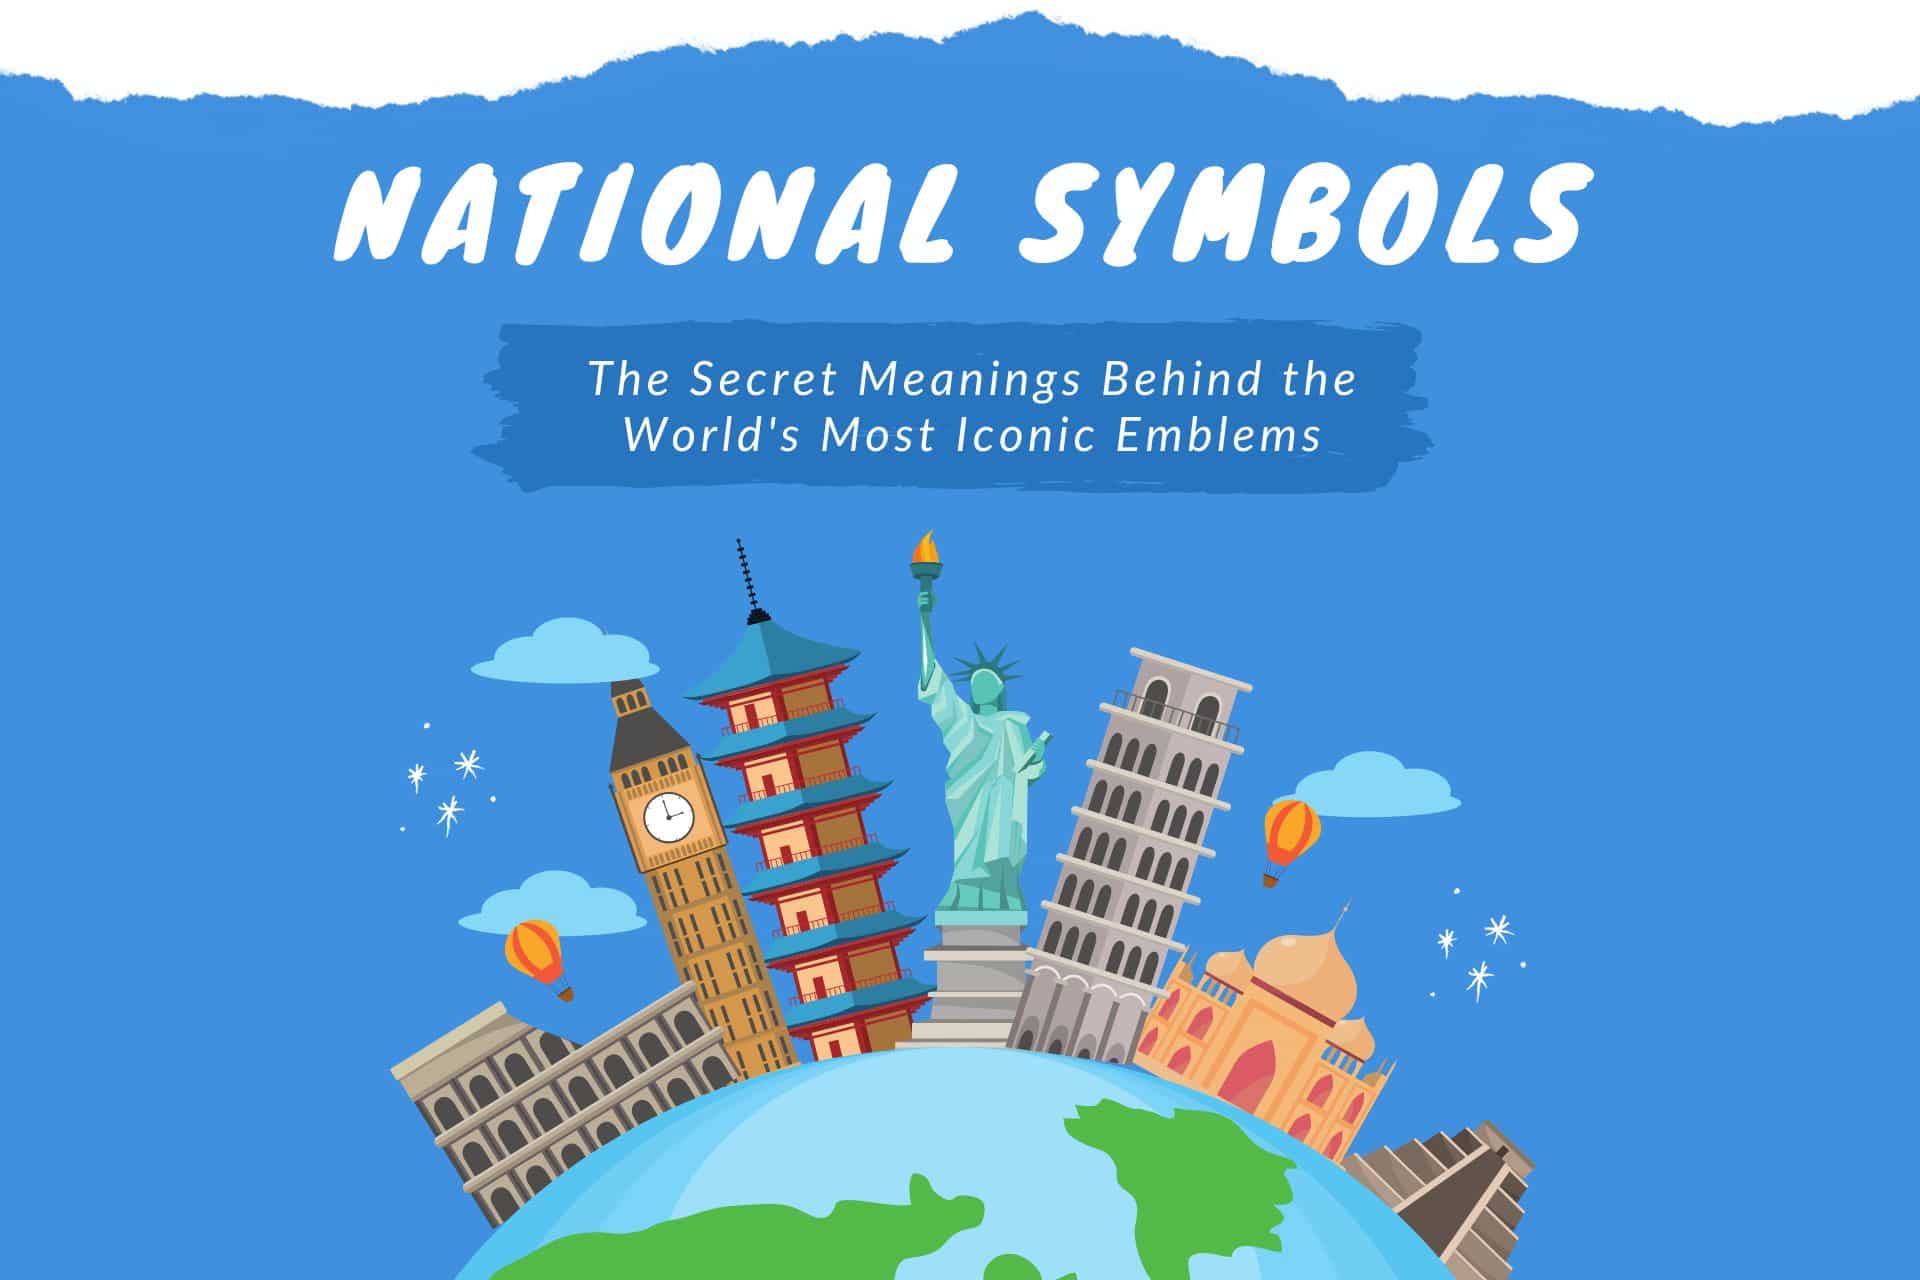 National symbols